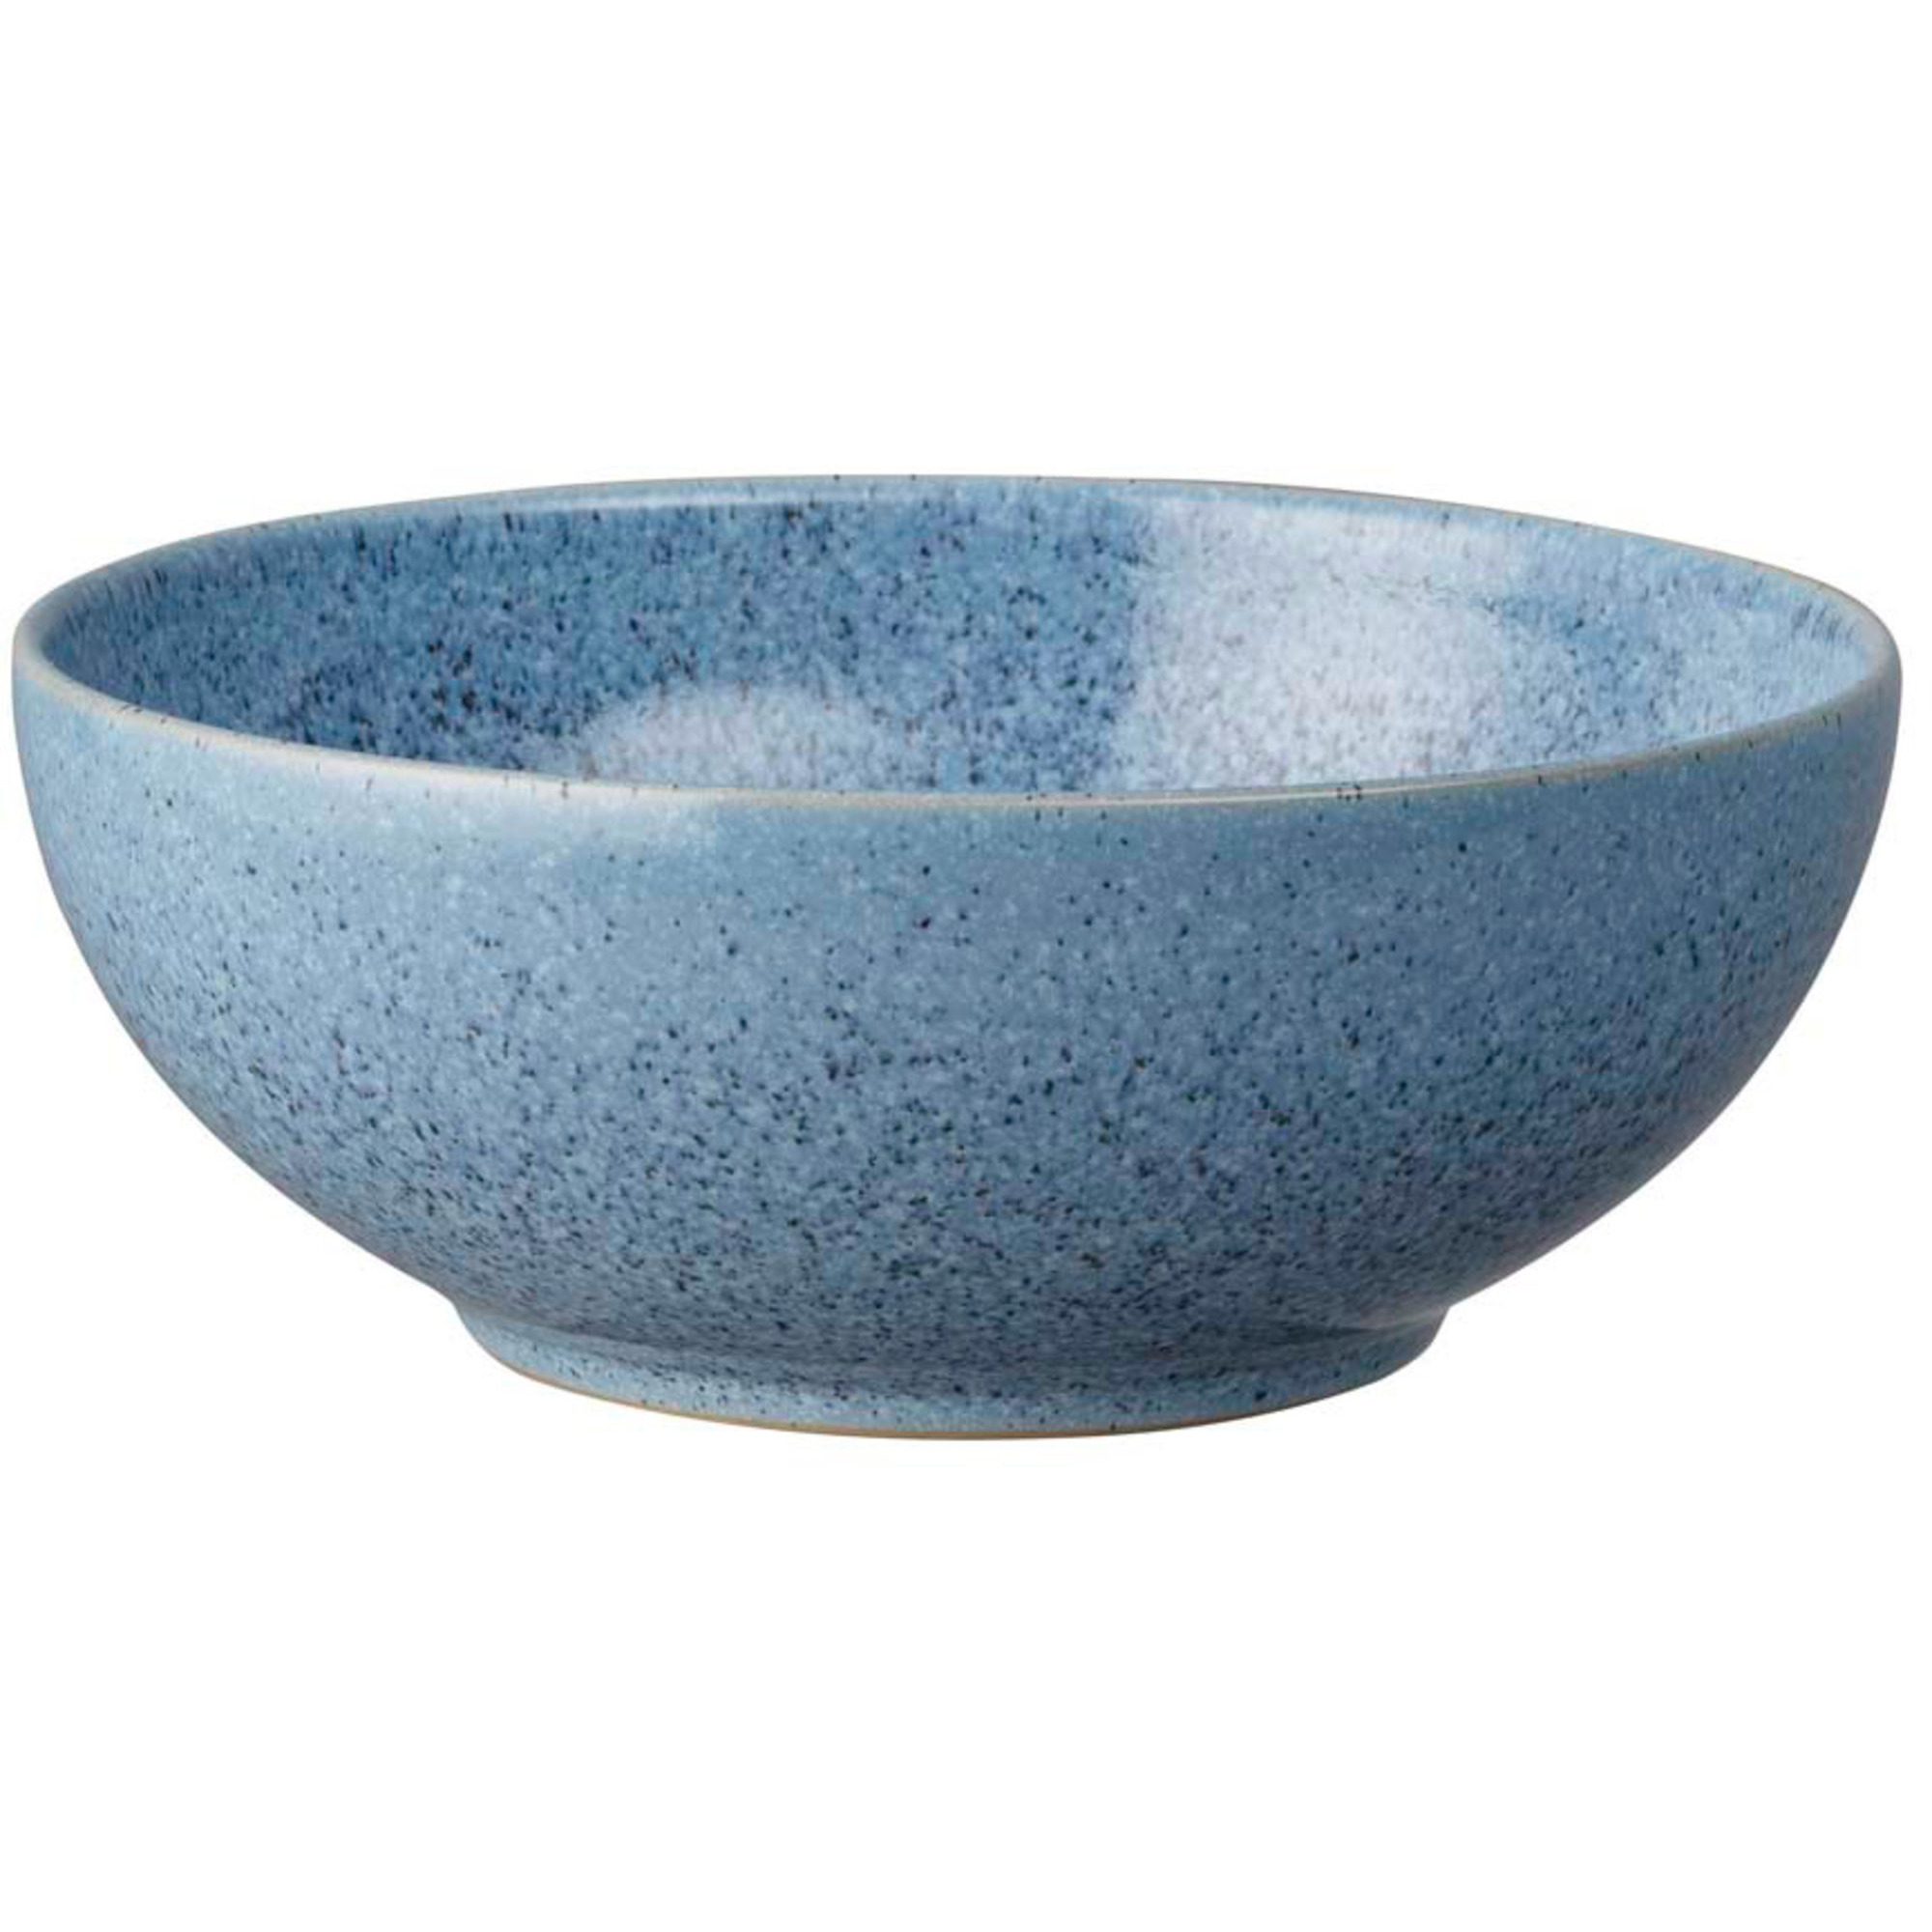 Denby Studio Blue dyb skål, 17 cm., flint (grå)